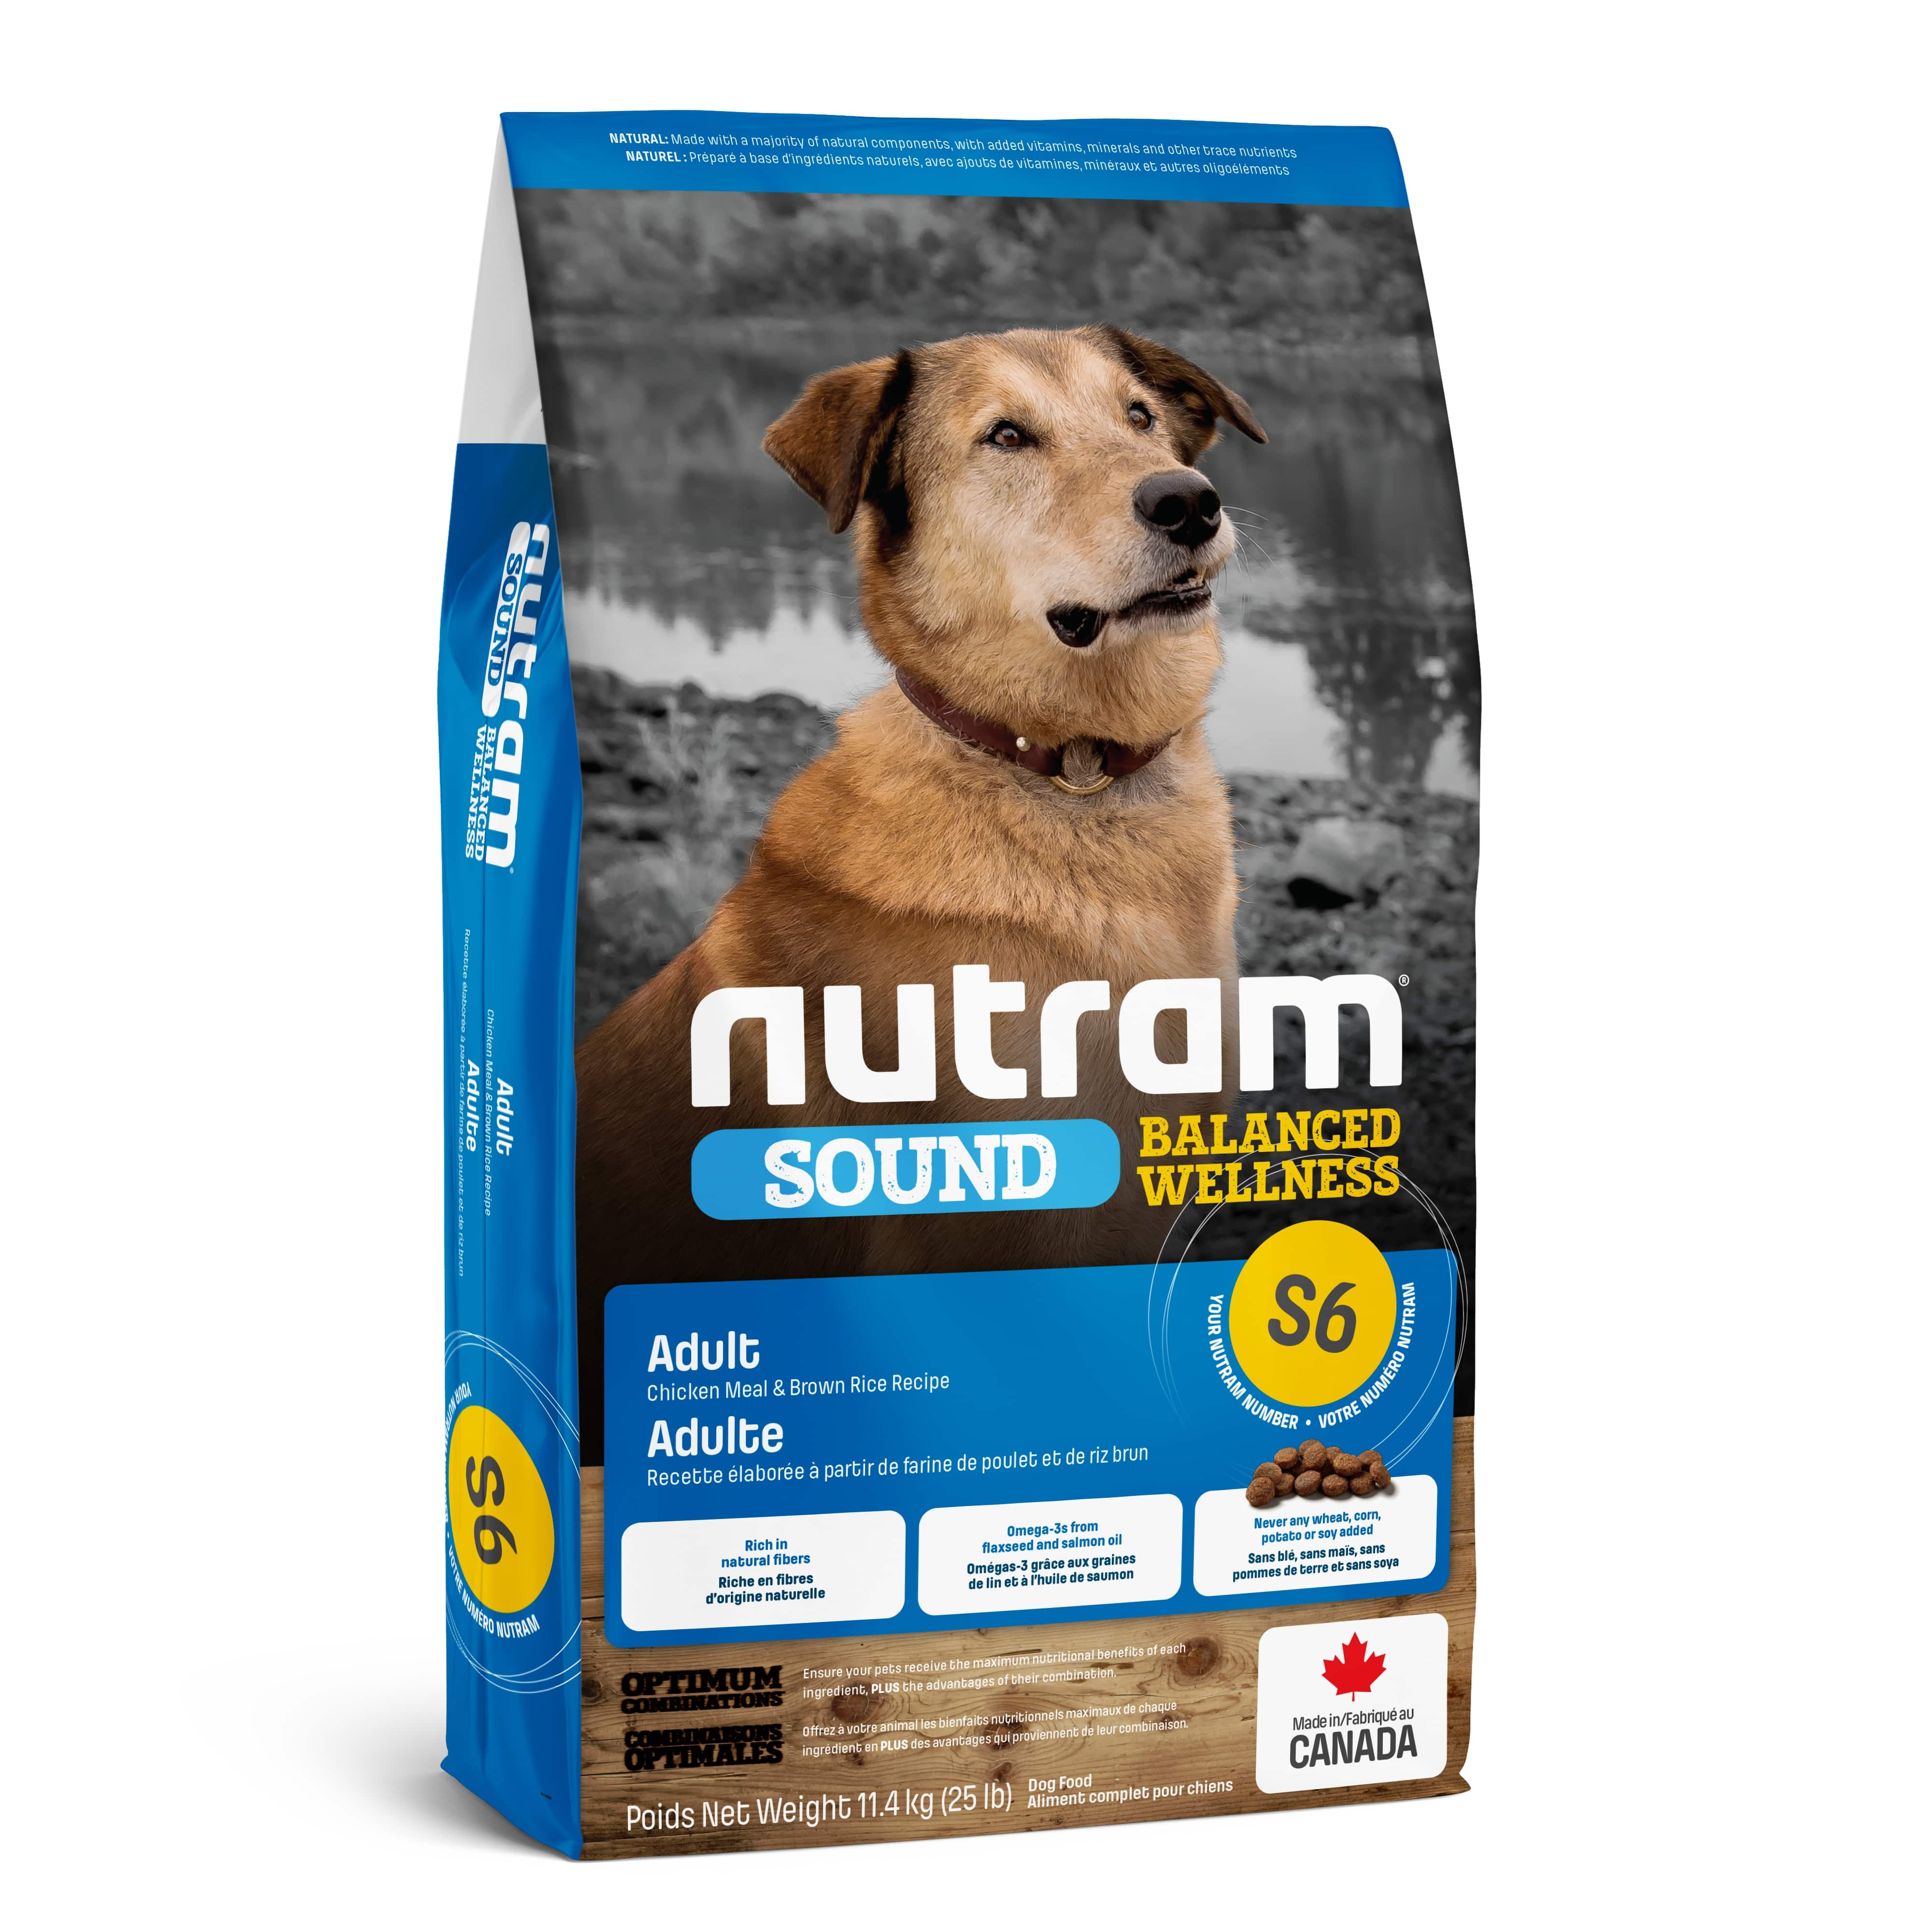 S6 Nutram Sound Balanced Wellness® Natural Adult Dog Food